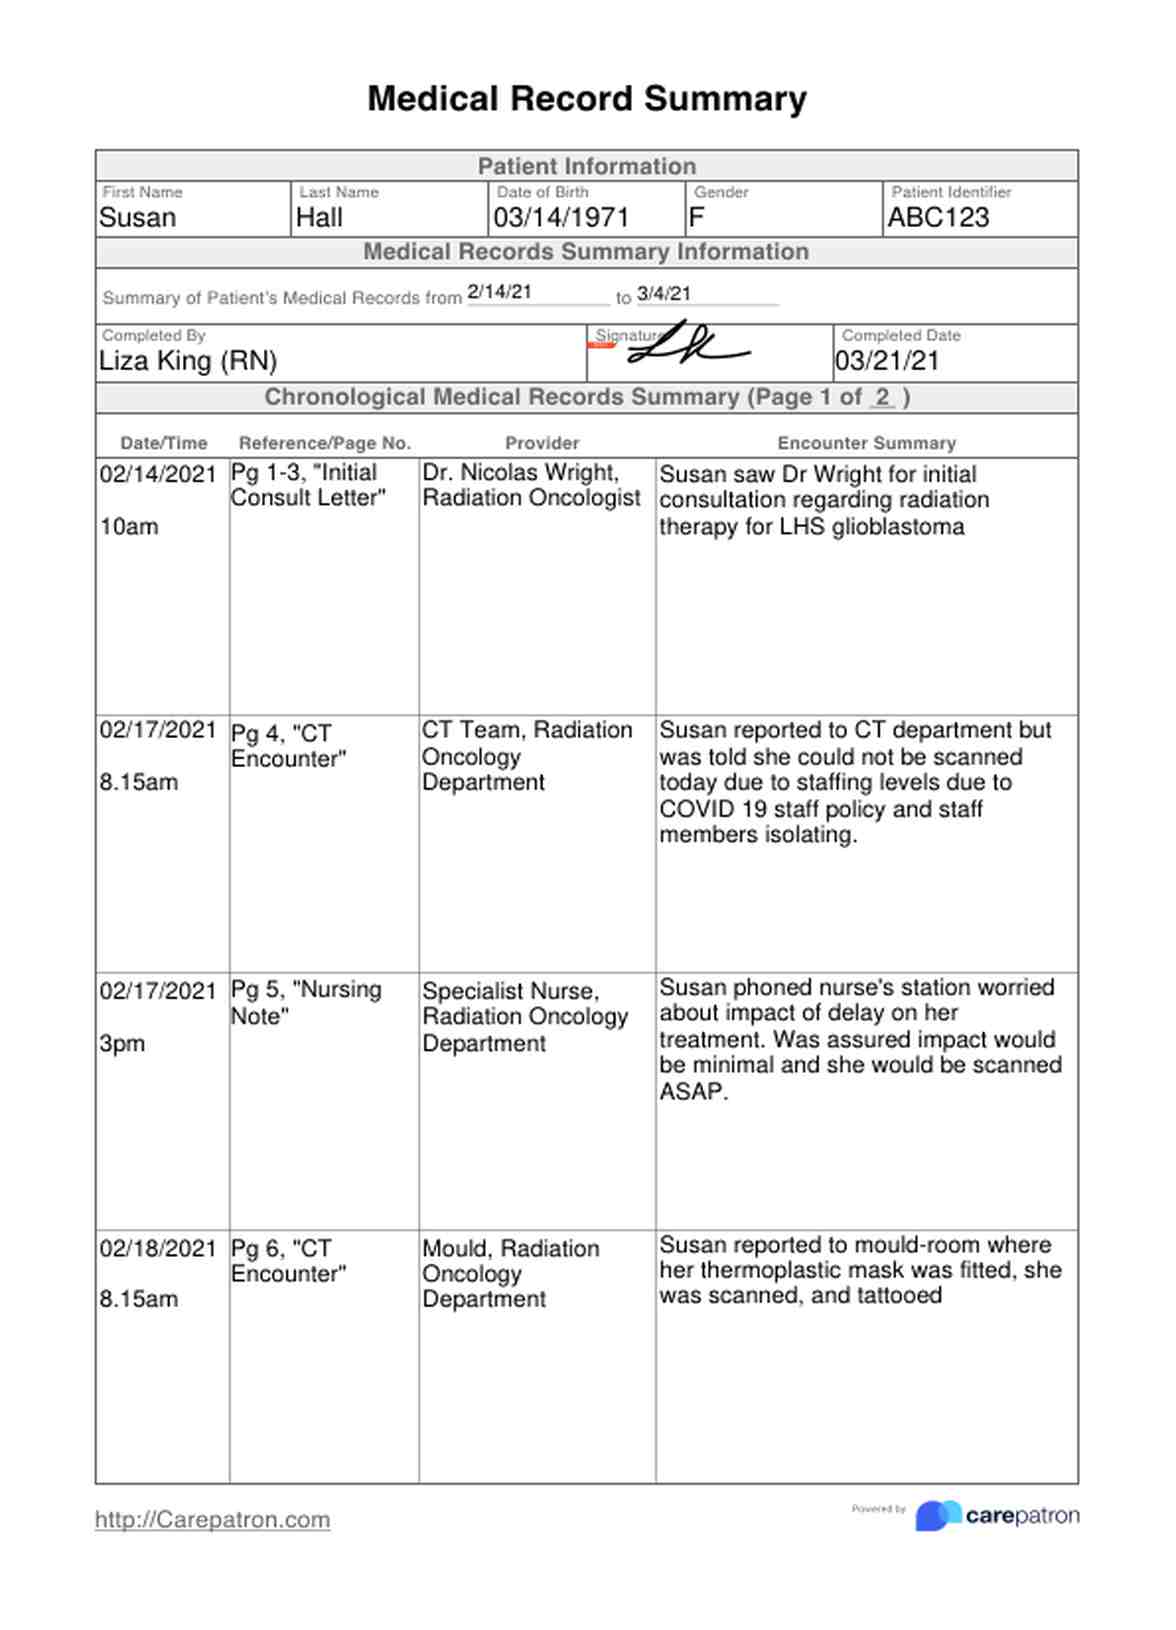 Medical Record Summary PDF Example